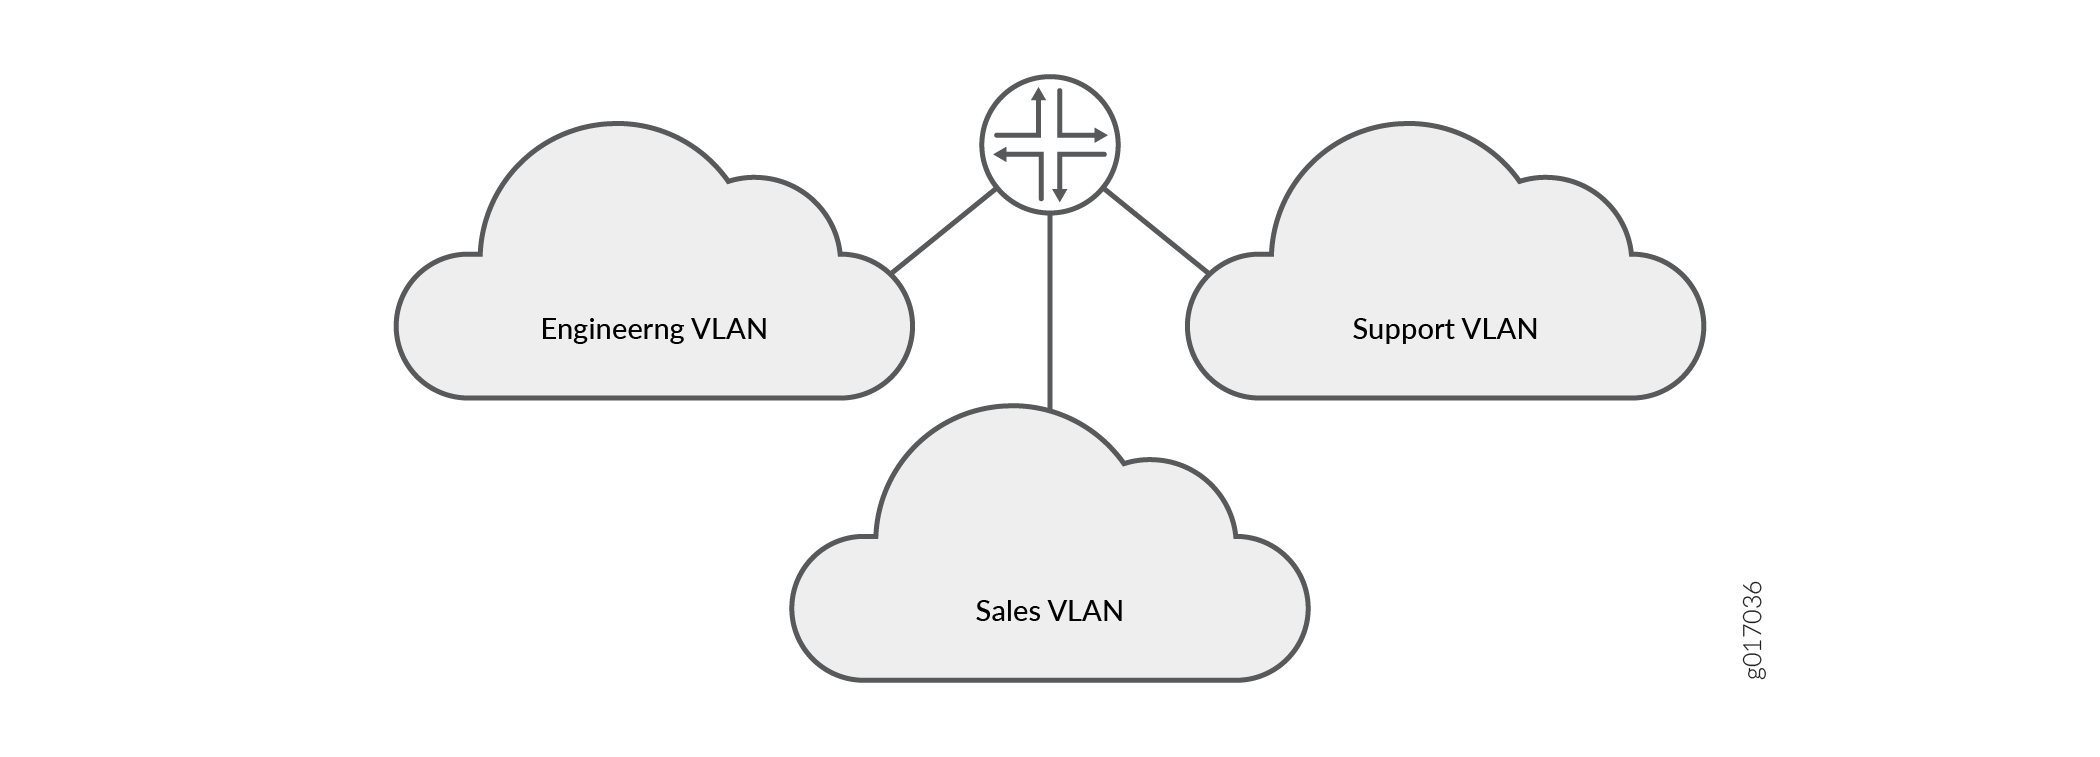 Typical VLAN